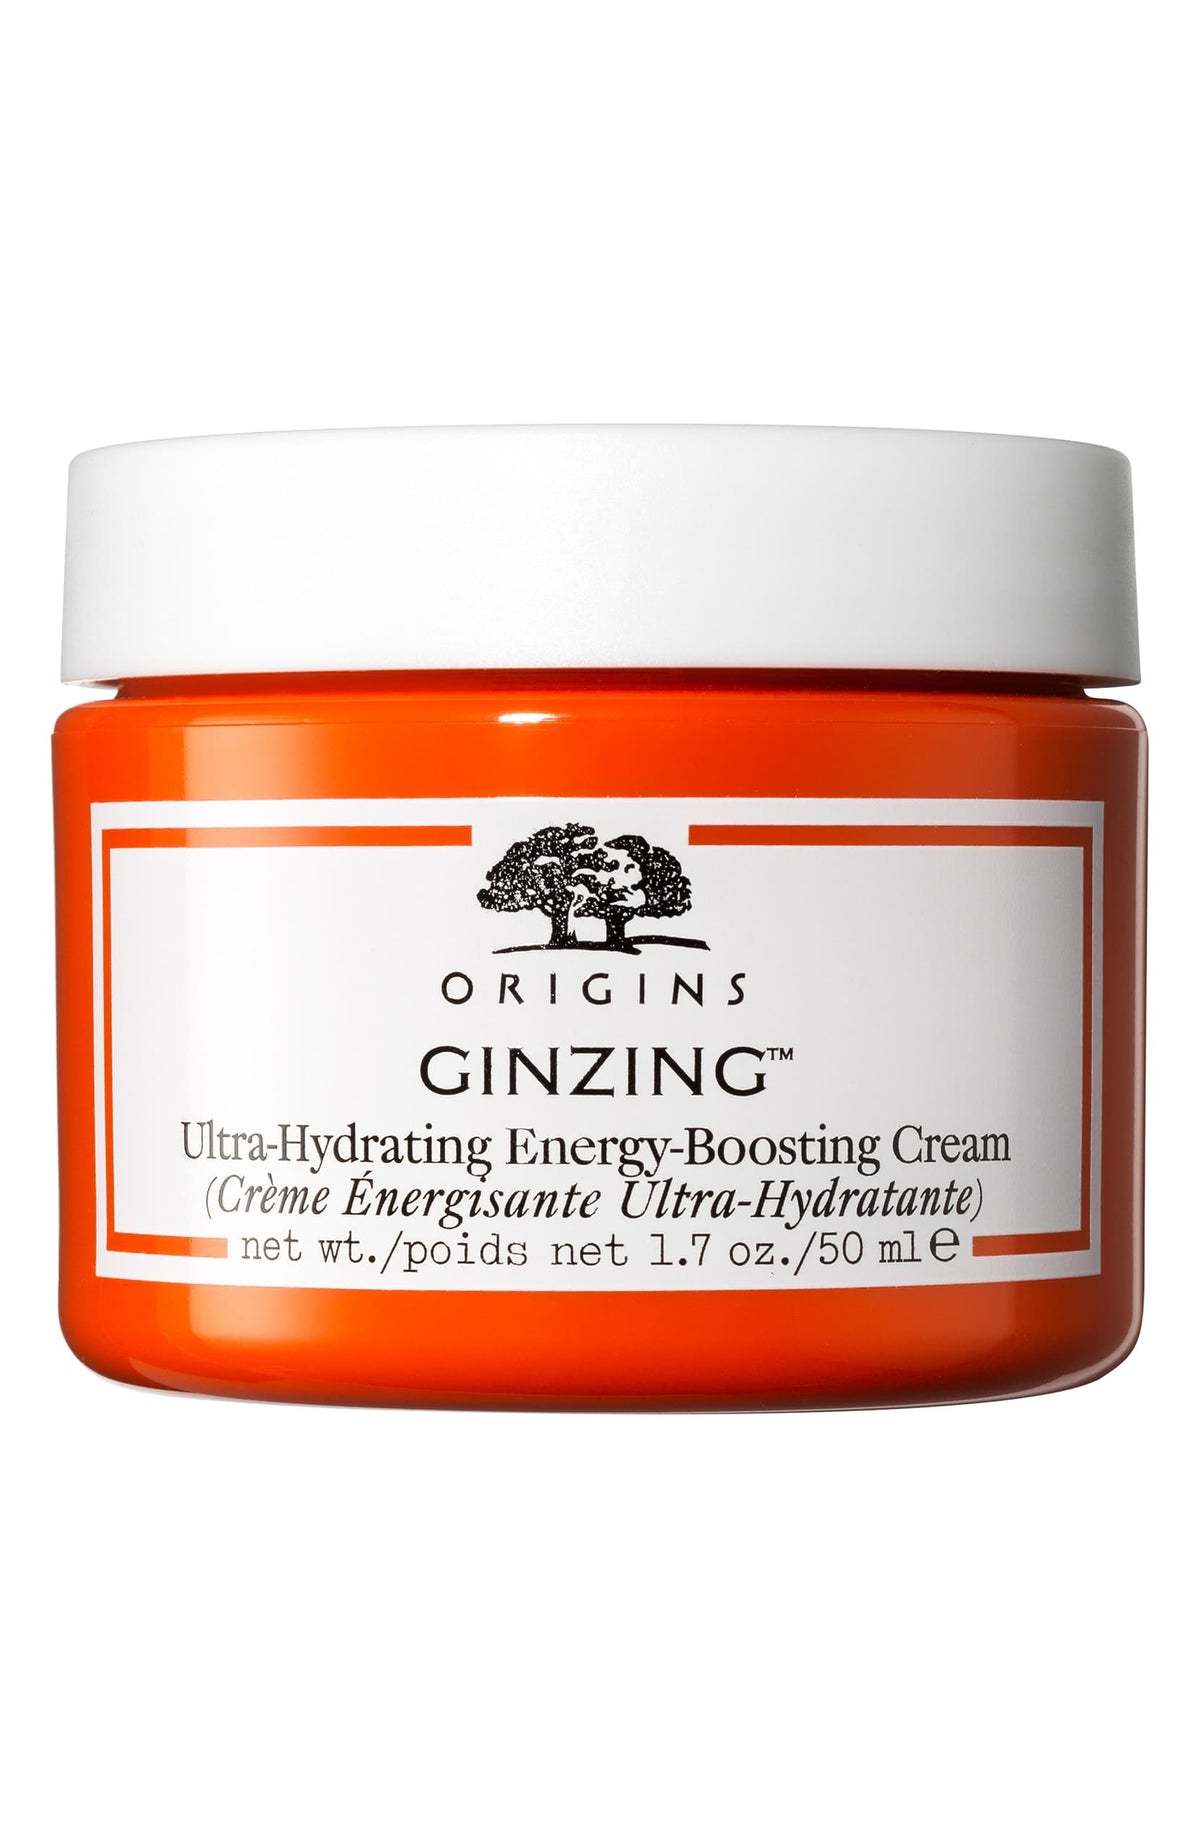 Origins GinZing Ultra Hydrating, Energy-Boosting Cream - eCosmeticWorld